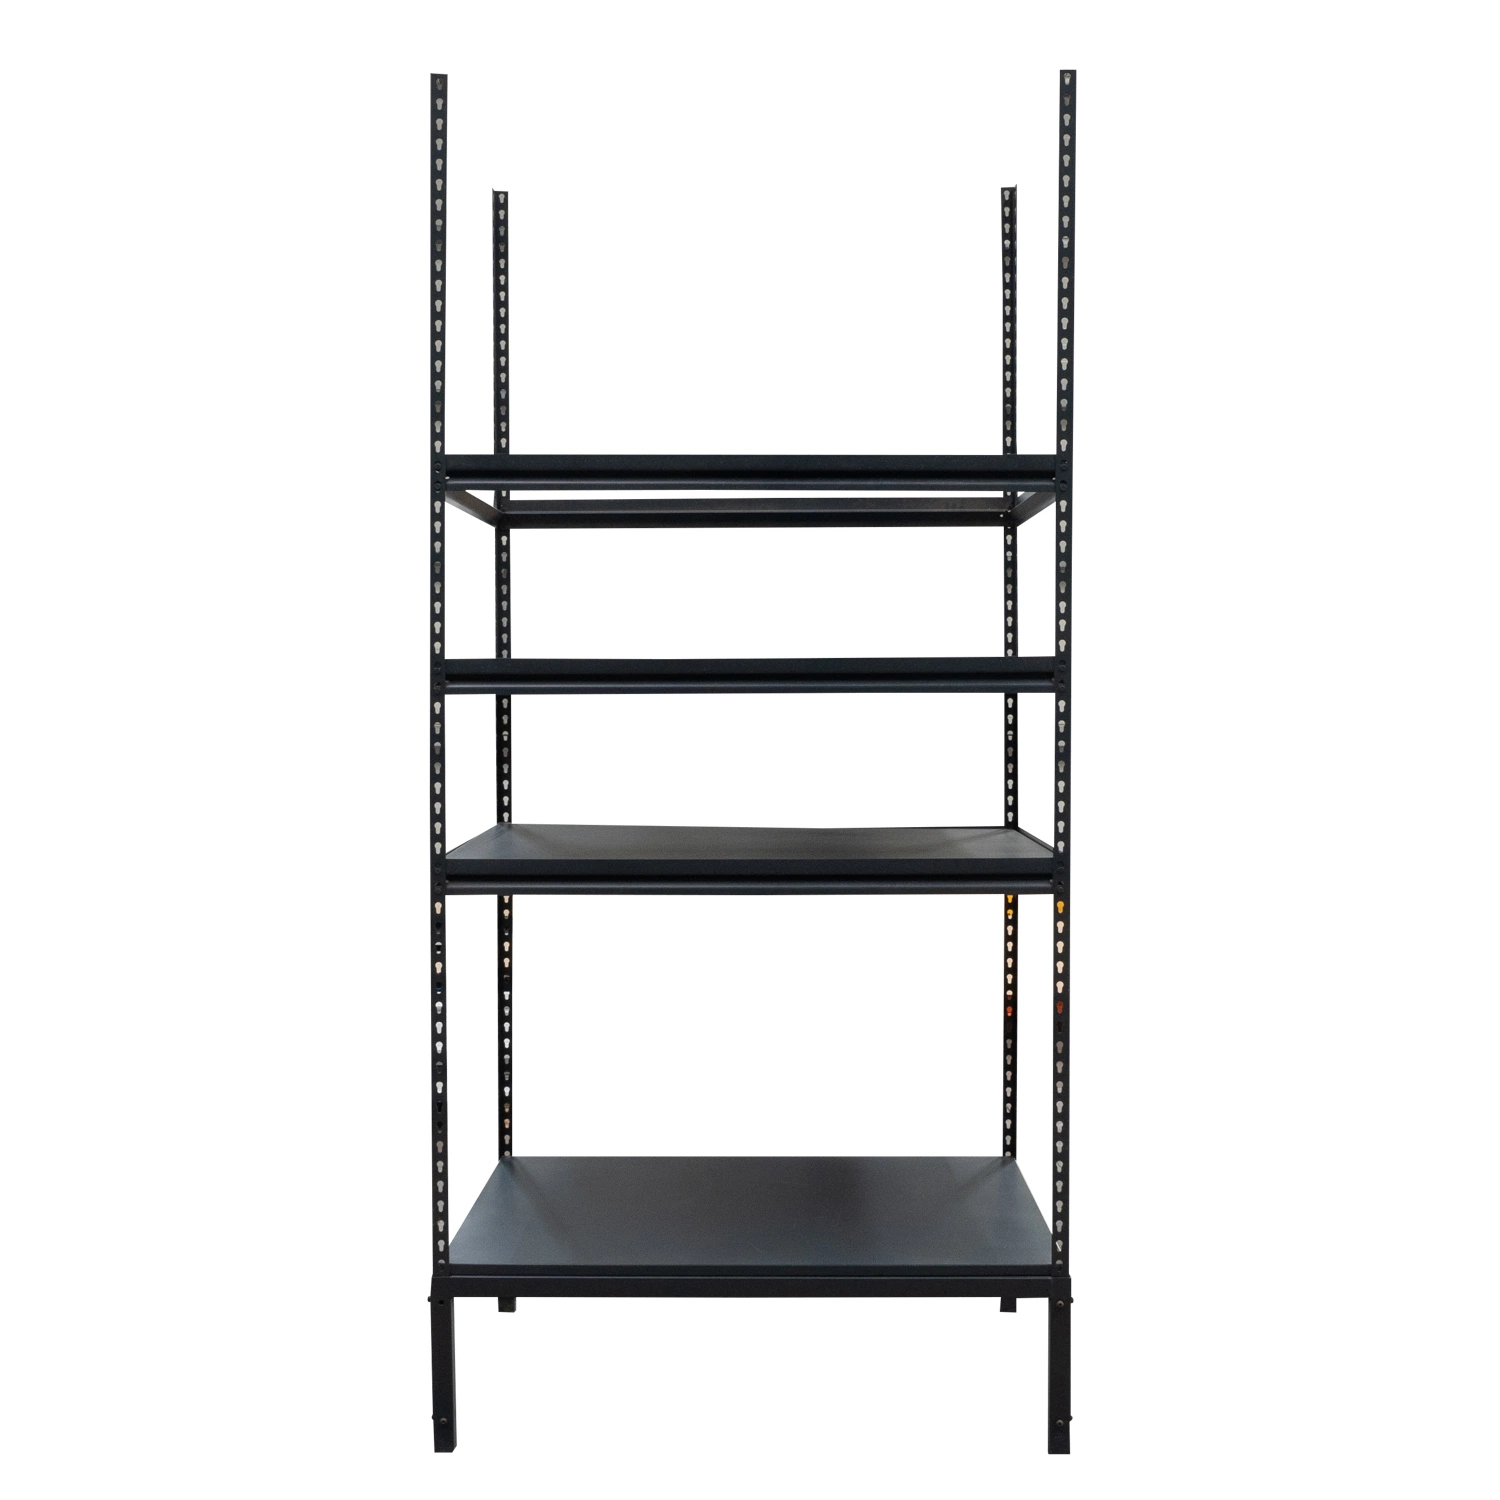 Light 5-Tier Boltless Adjustable Shelves/Rack for Warehouse/Home/Office/Kitchen Furniture.